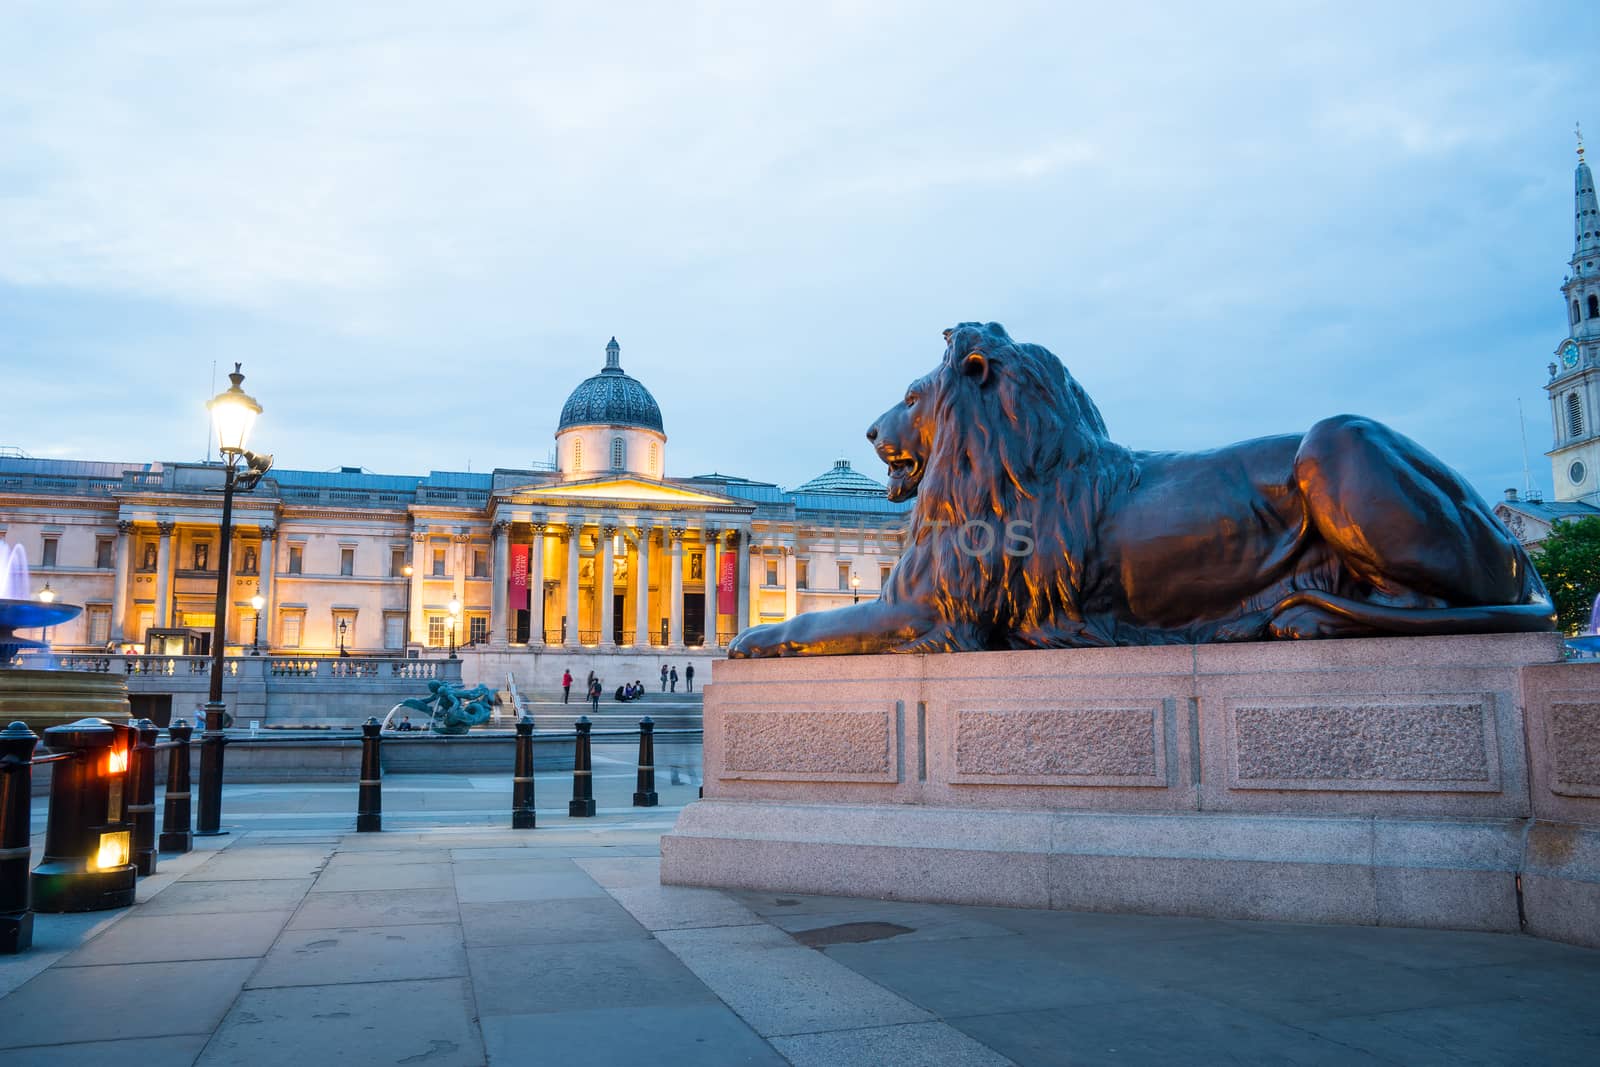 Trafalgar square in London England UK by Alicephoto